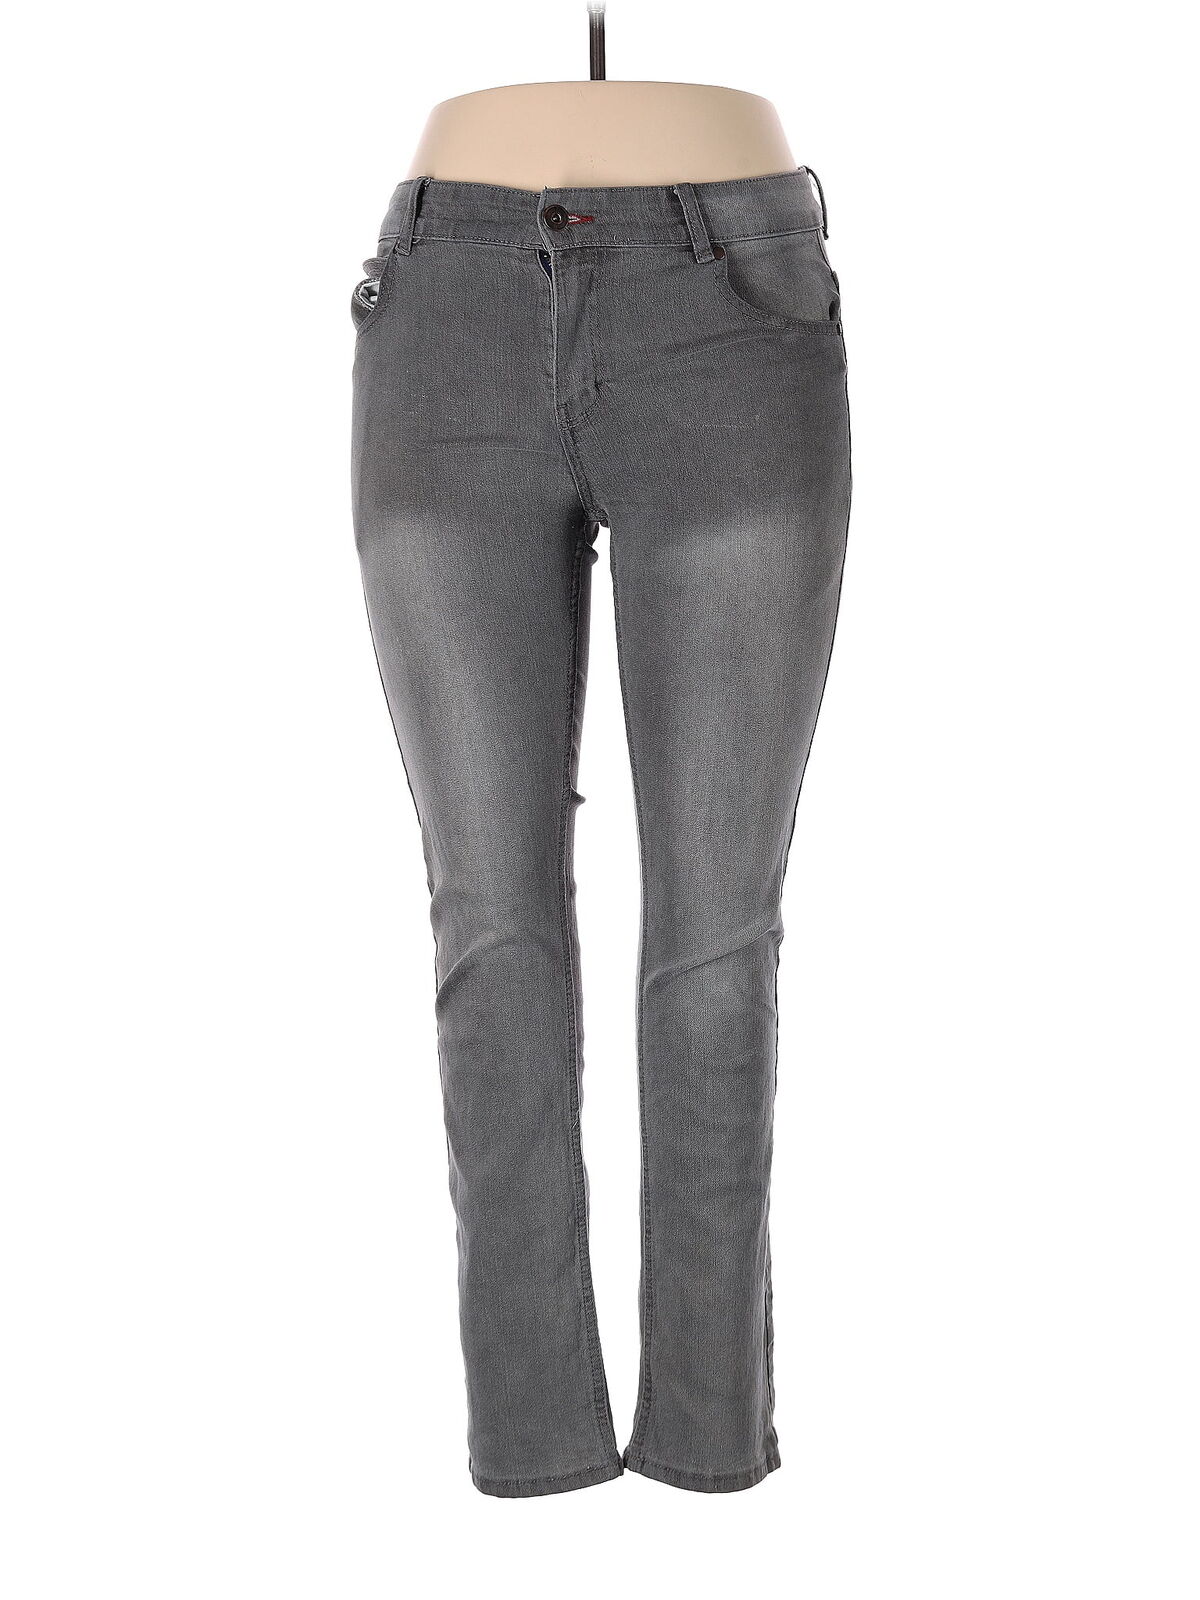 Tommy Hilfiger Women Gray Jeans 18 Plus - image 1